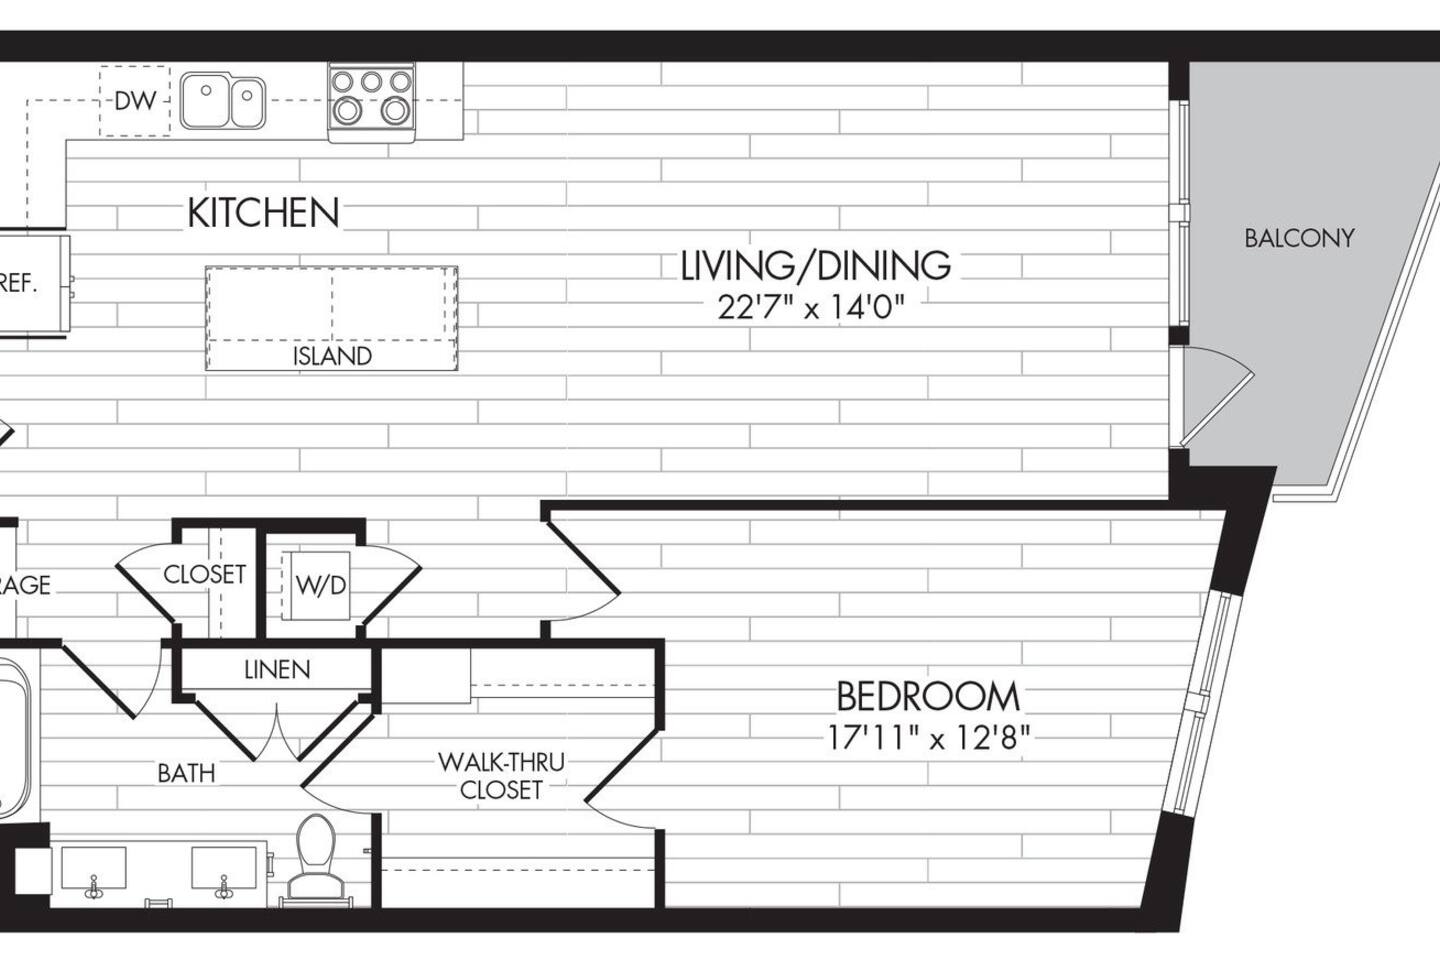 Floorplan diagram for 1R, showing 1 bedroom